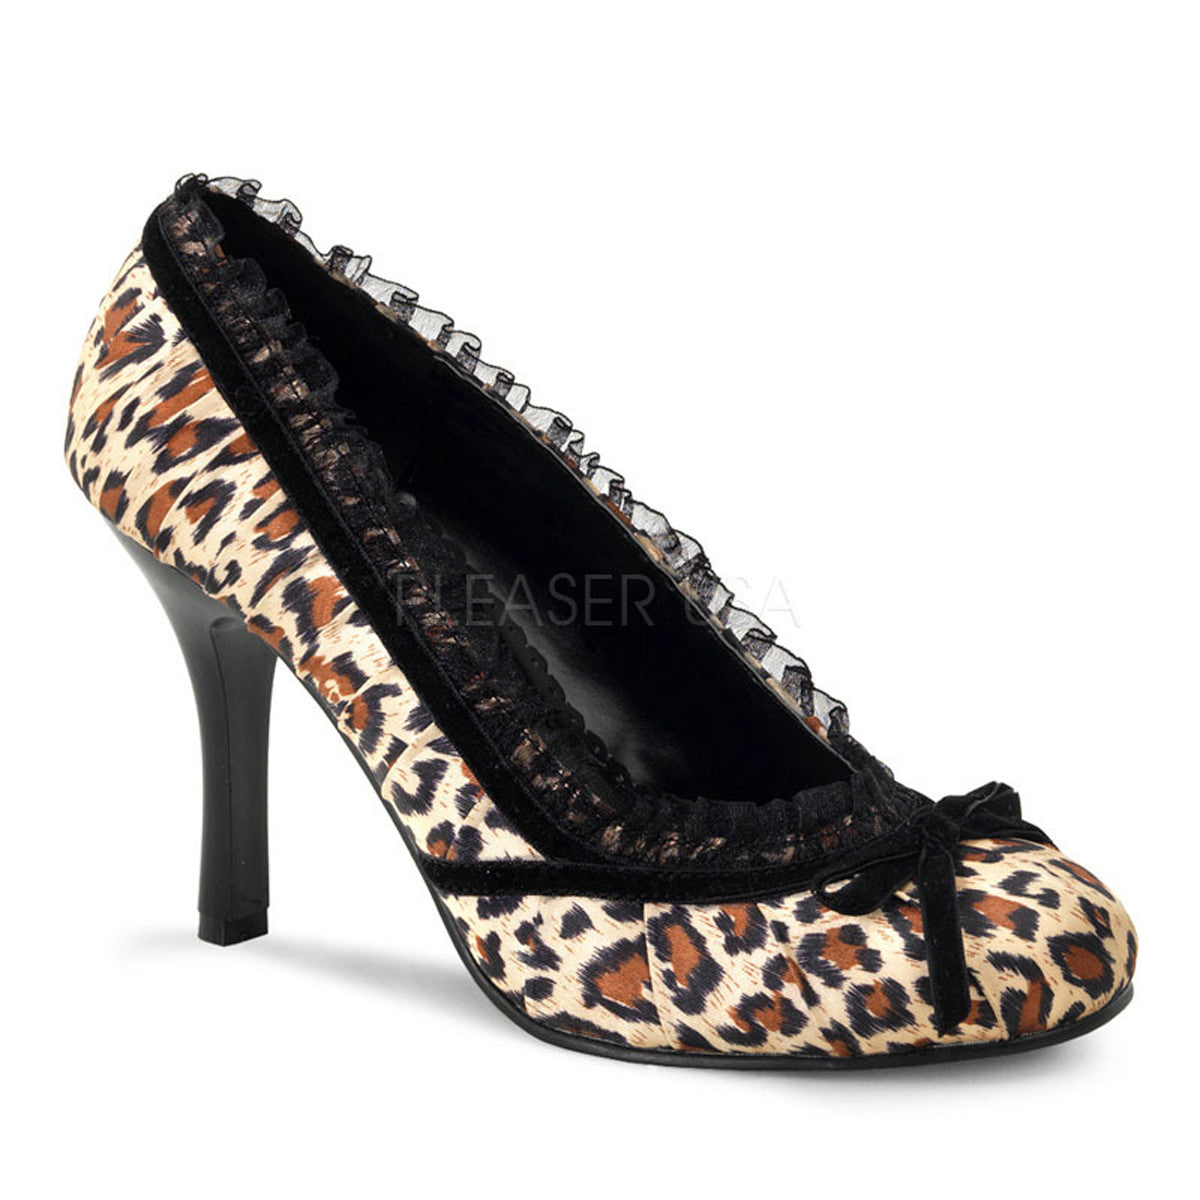 FUNTASMA DAINTY-420 Cheetah Print Satin Pumps - Shoecup.com